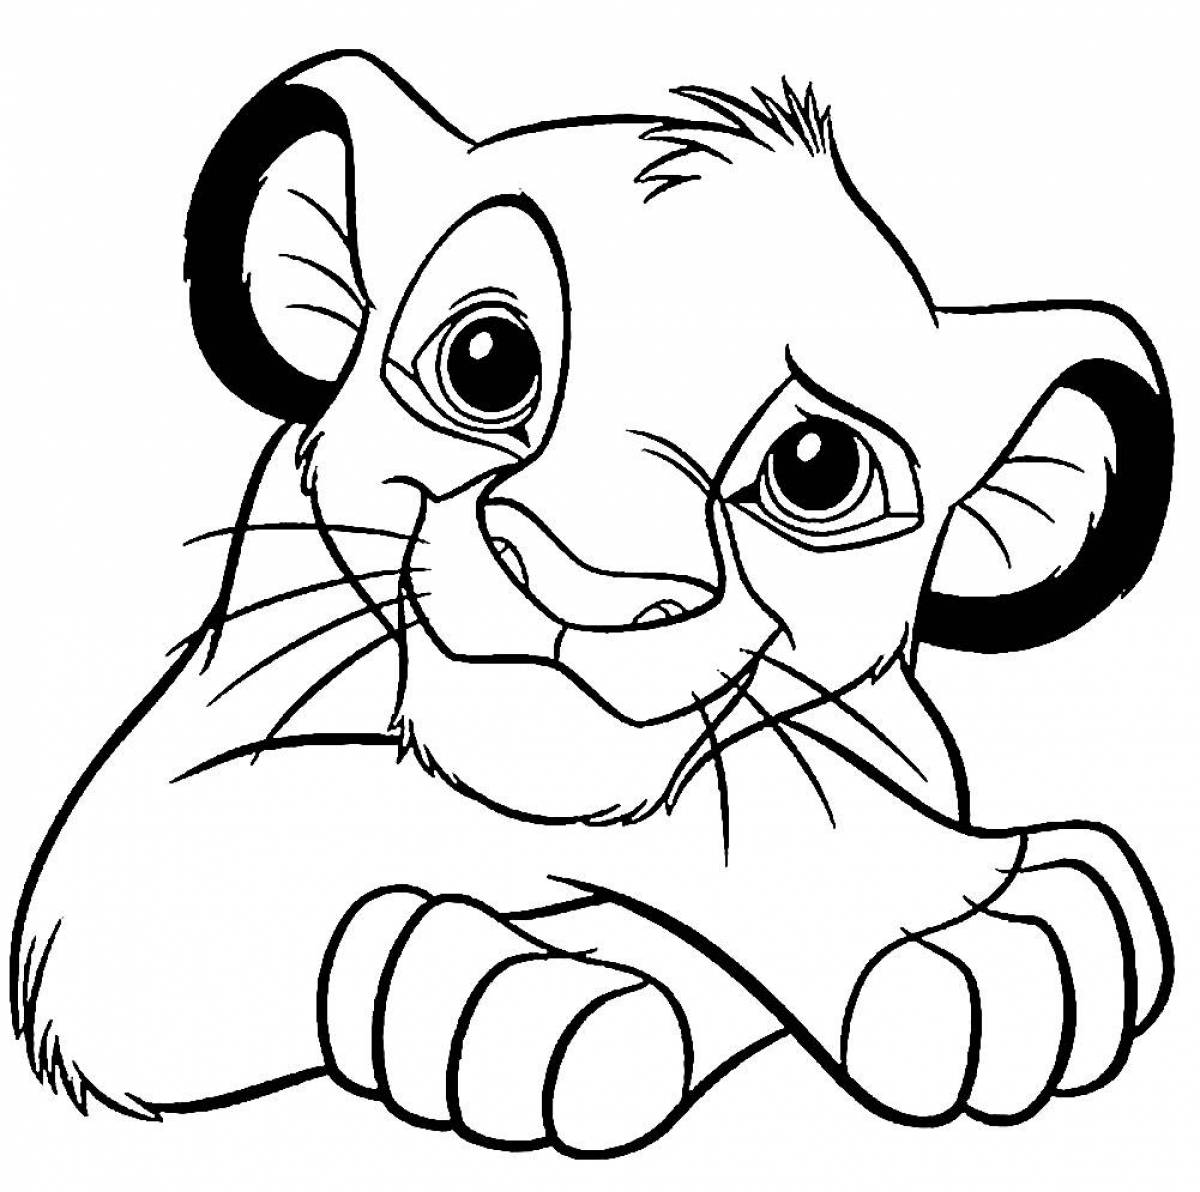 Generous lion king coloring page